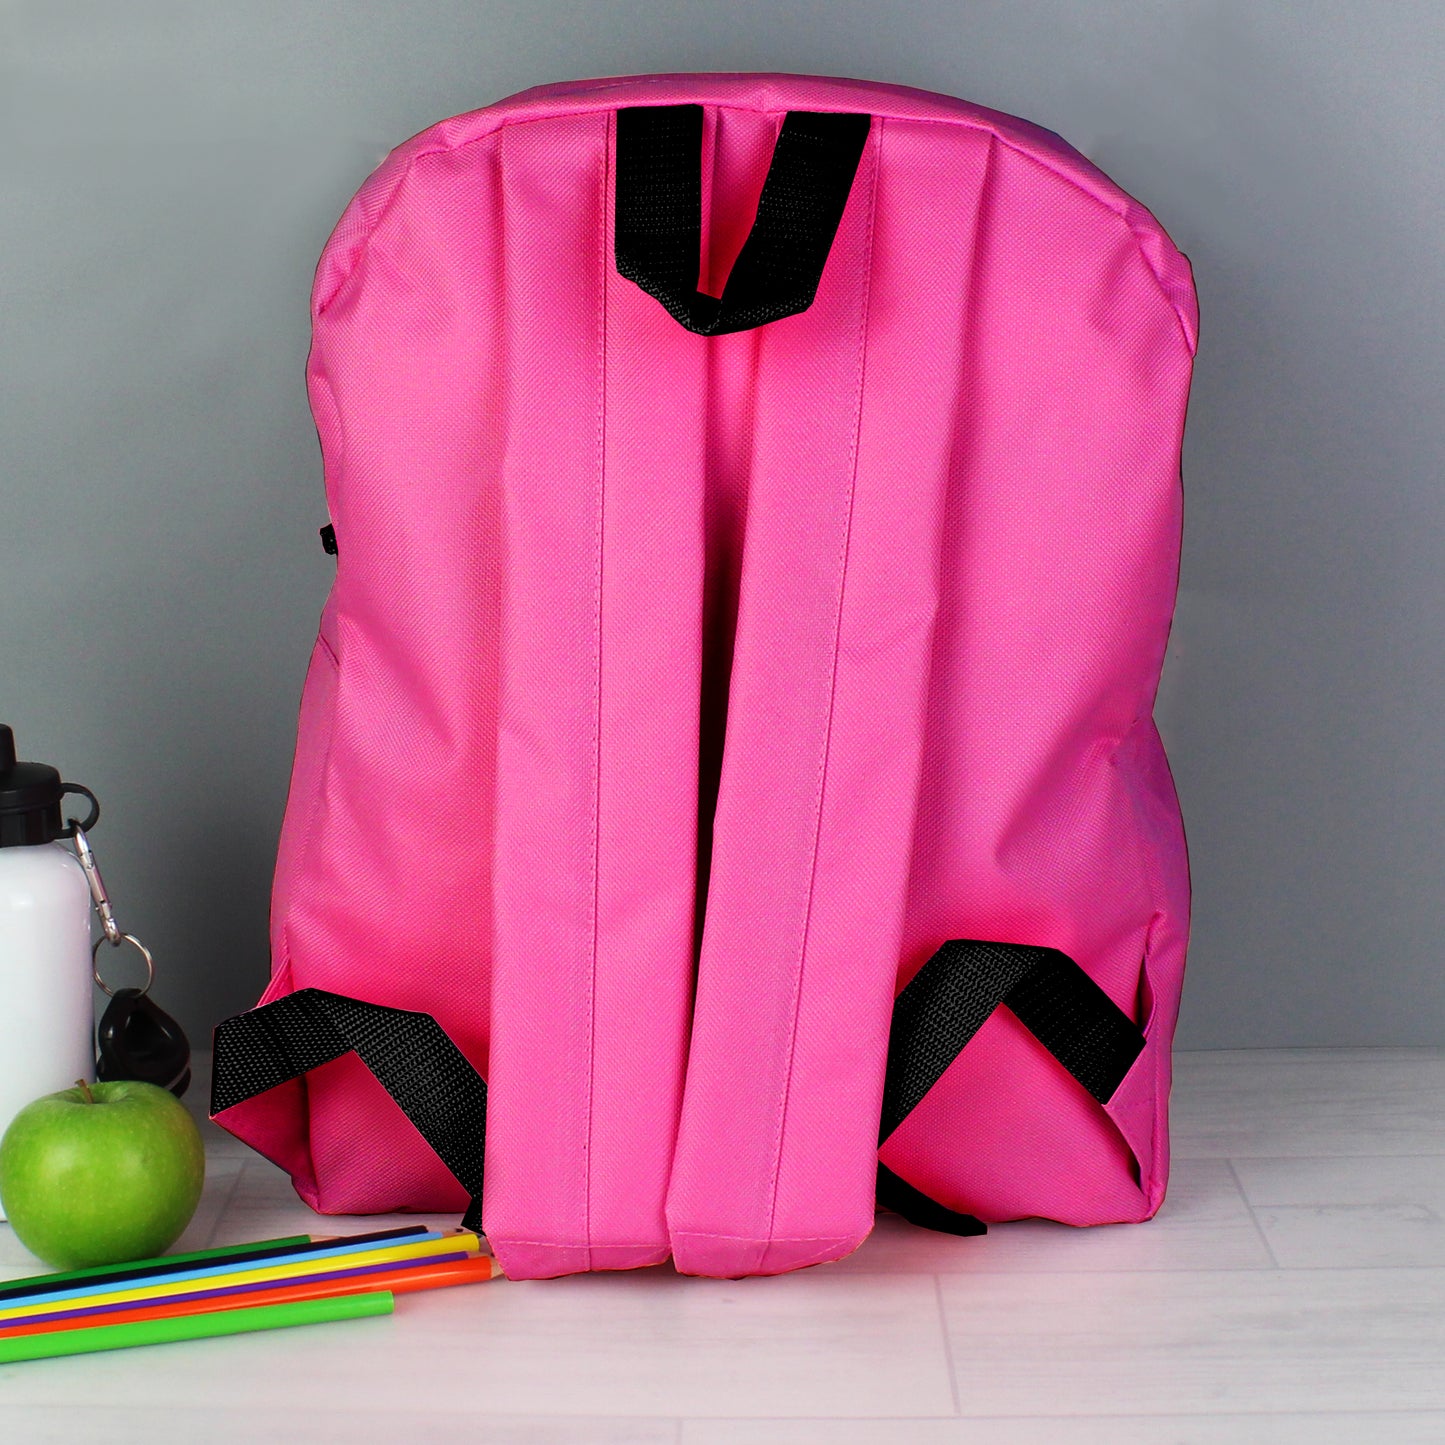 Personalised Rainbow Unicorn Backpack - Pink - Violet Belle Gifts - Personalised Rainbow Unicorn Backpack - Pink